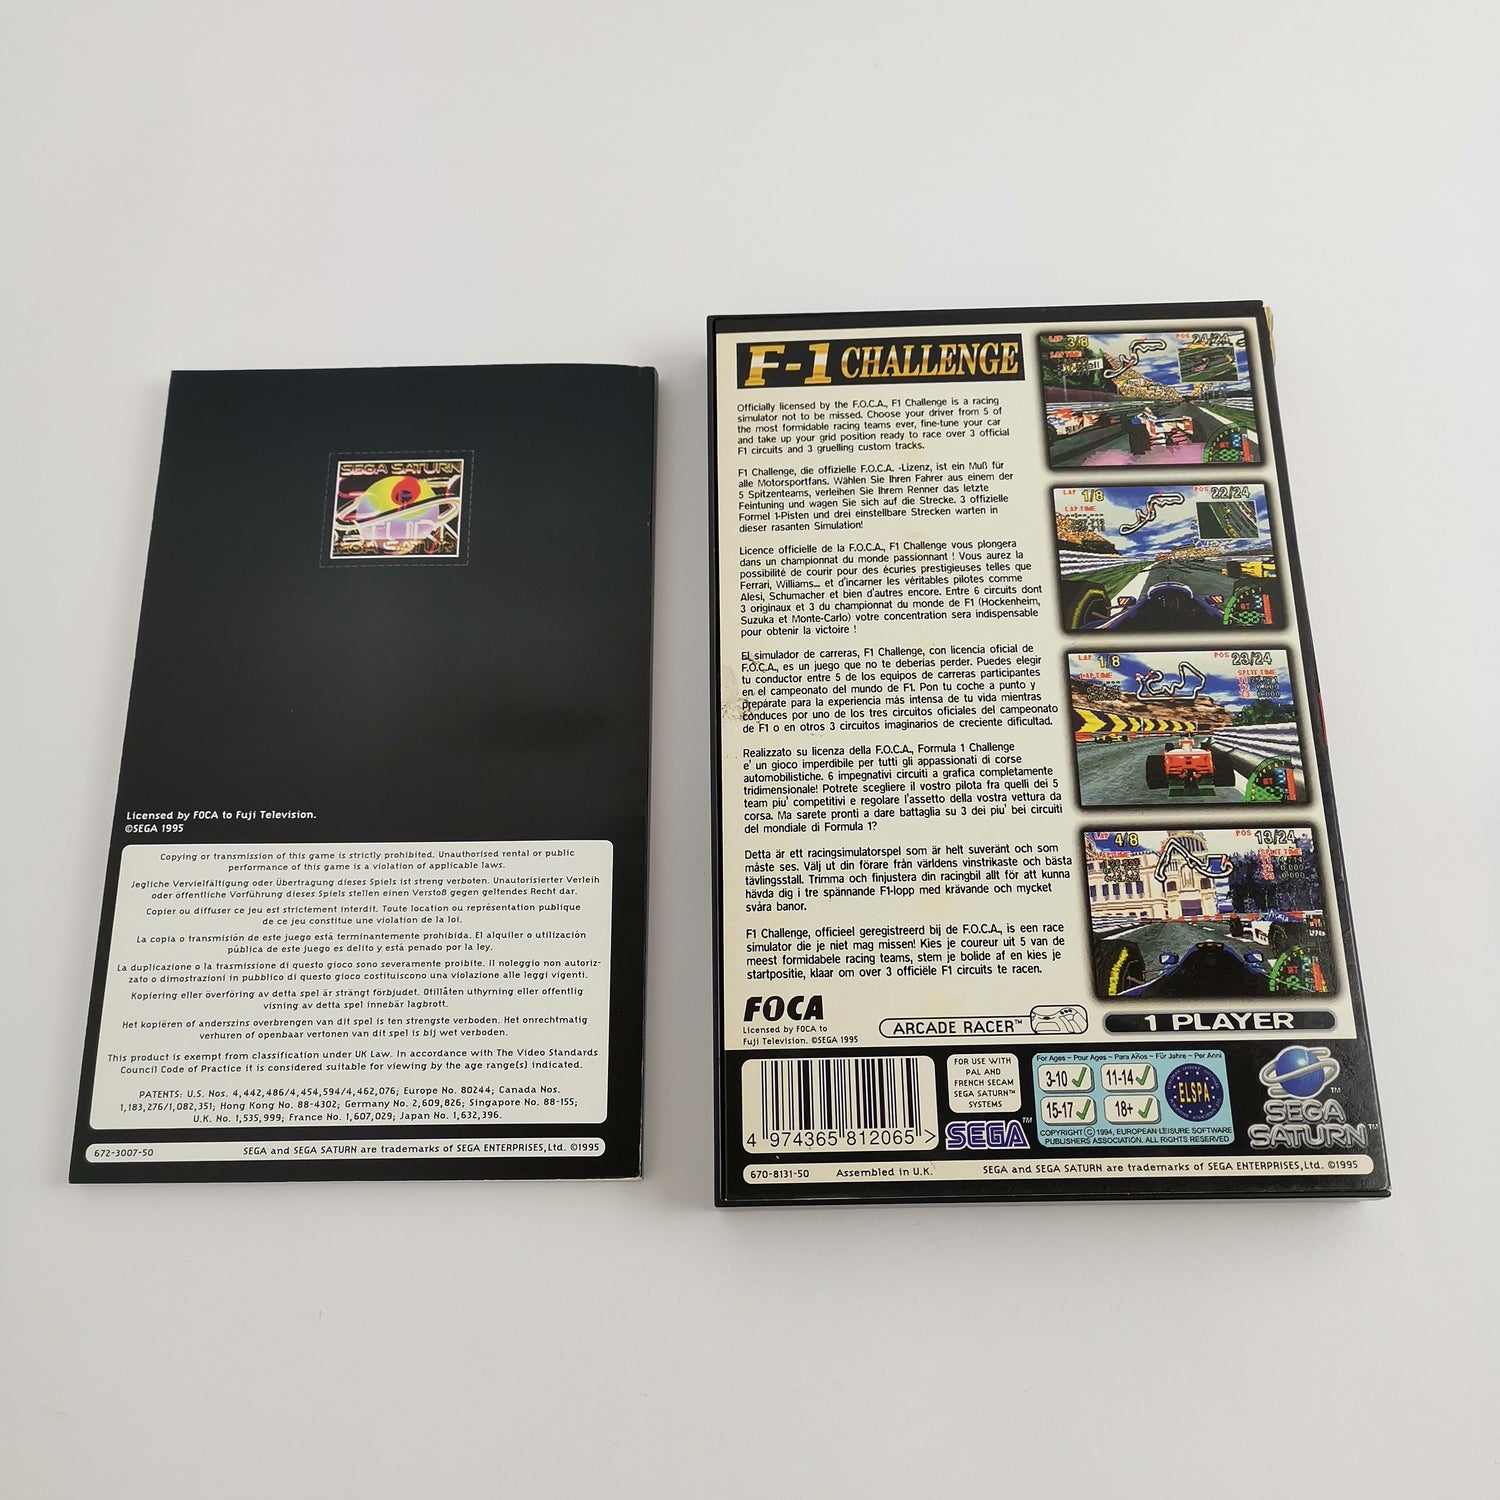 Sega Saturn Spiel : F-1 Challenge | SegaSaturn - OVP PAL Version